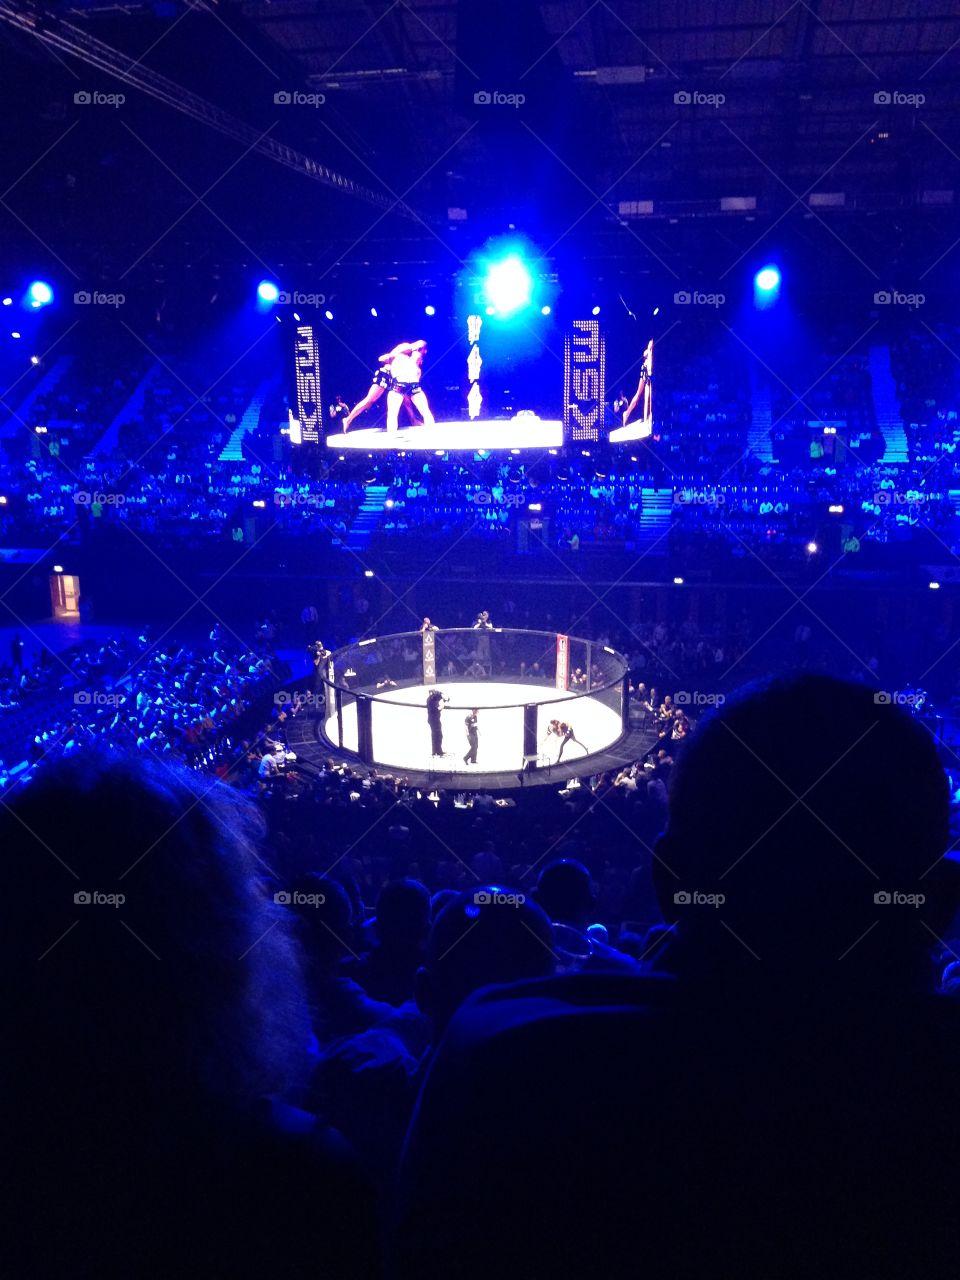 KSW 32 MMA fight night on Wembley Arena UK